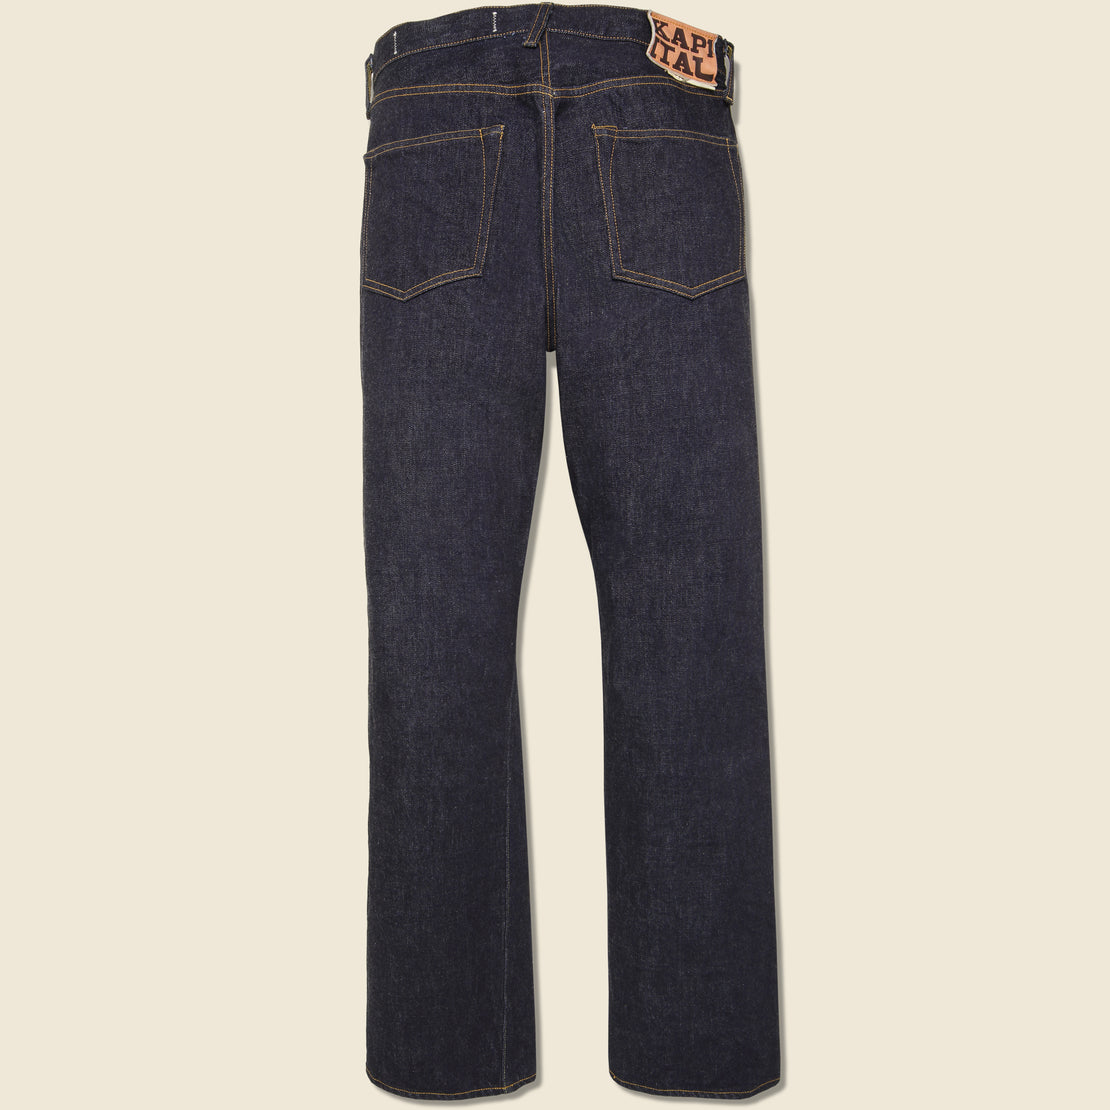 14oz Denim TH Straight Jean - One Wash - Kapital - STAG Provisions - Pants - Denim